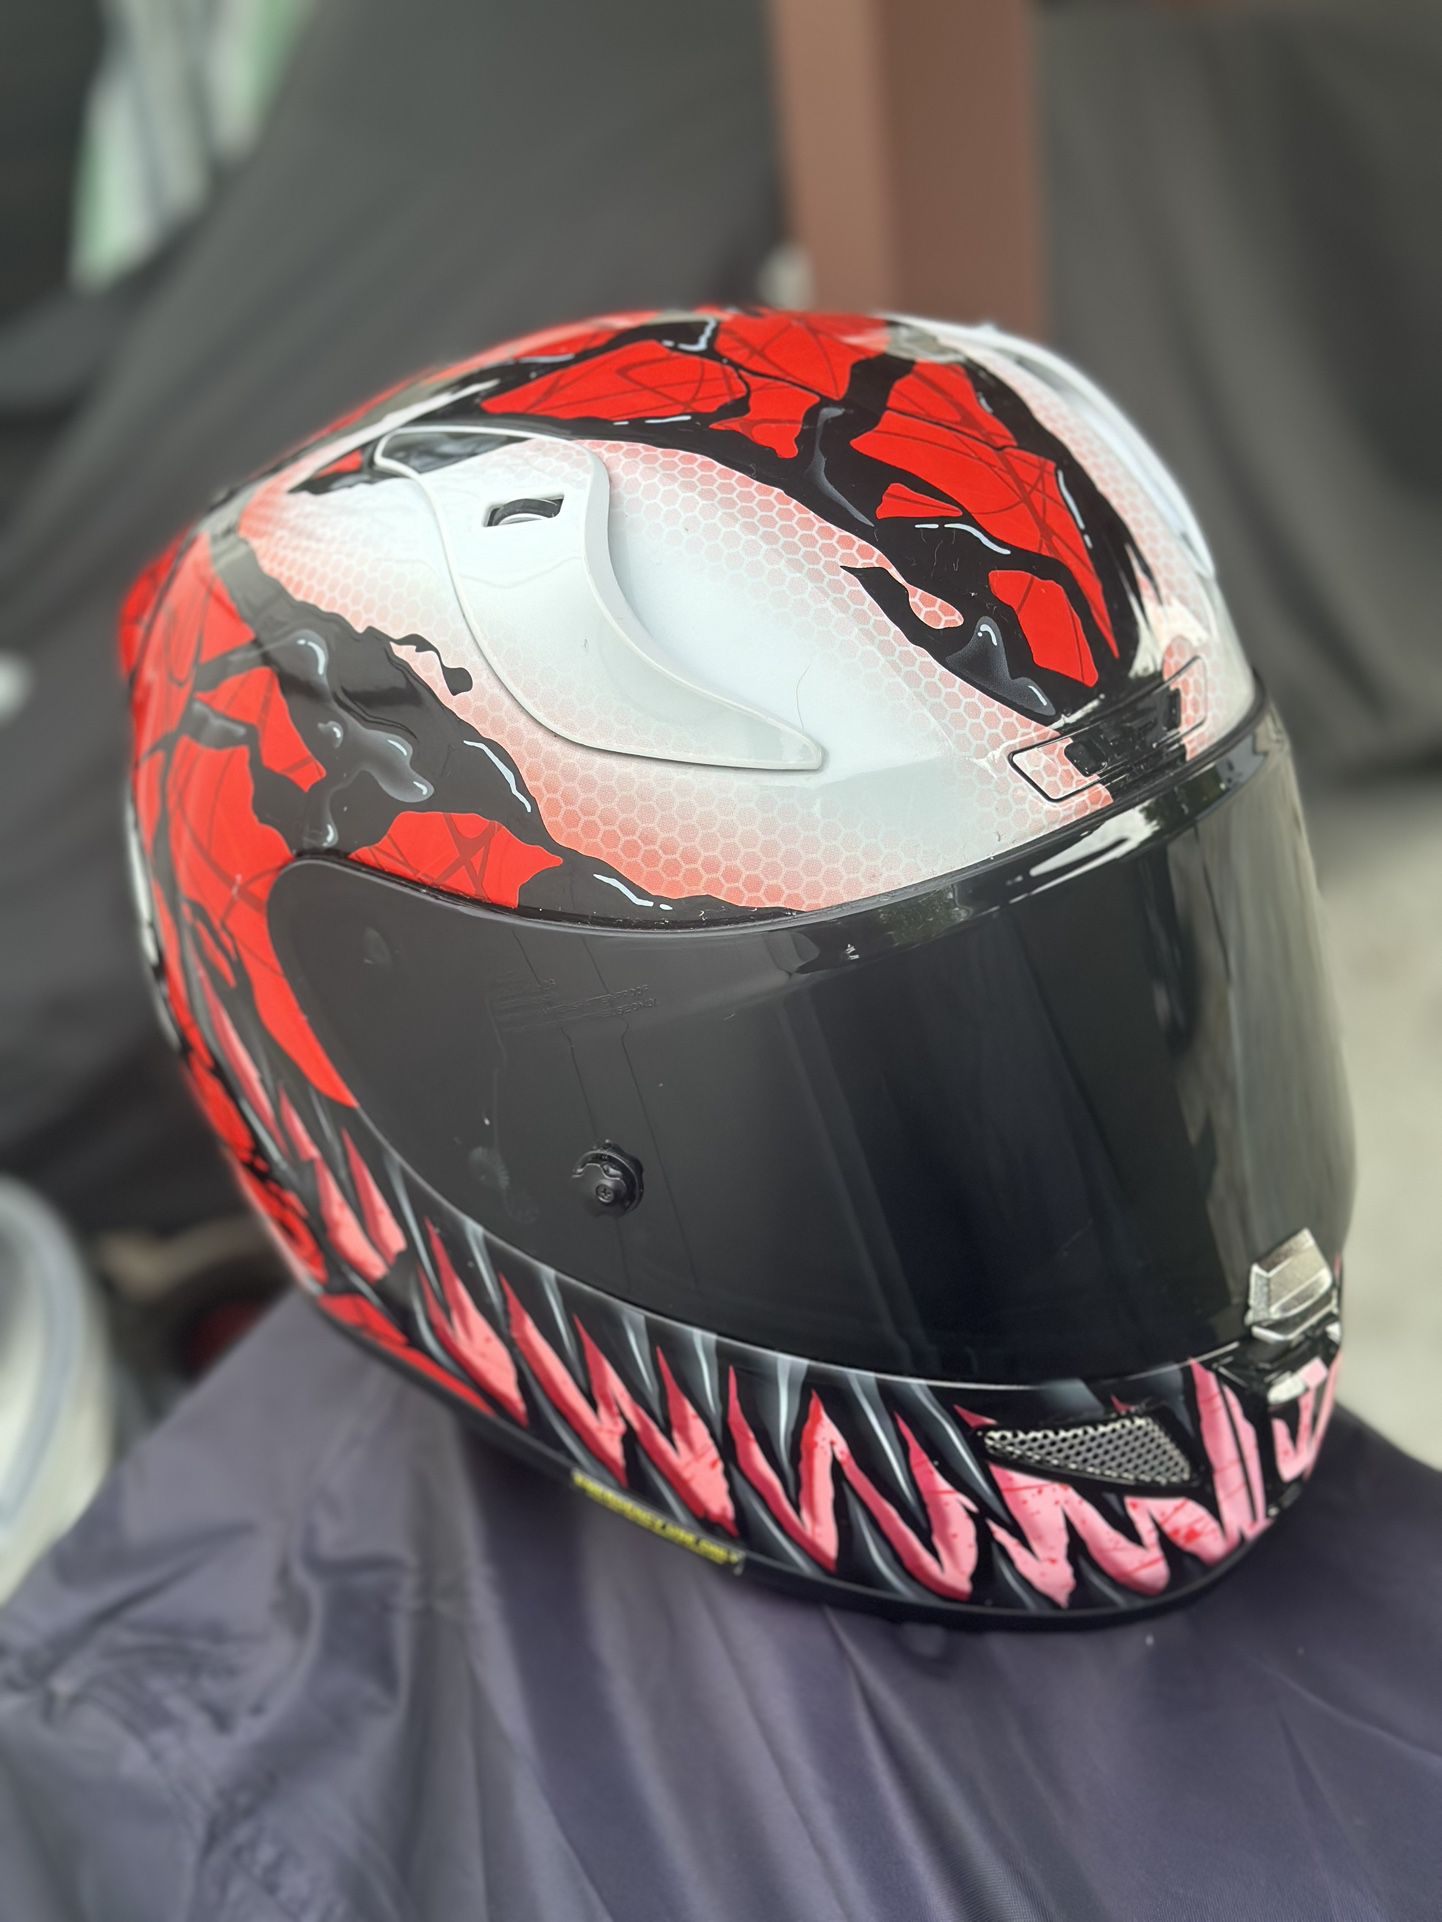 HJC RPHA 11 Pro Carnage Full Face Helmet size XL